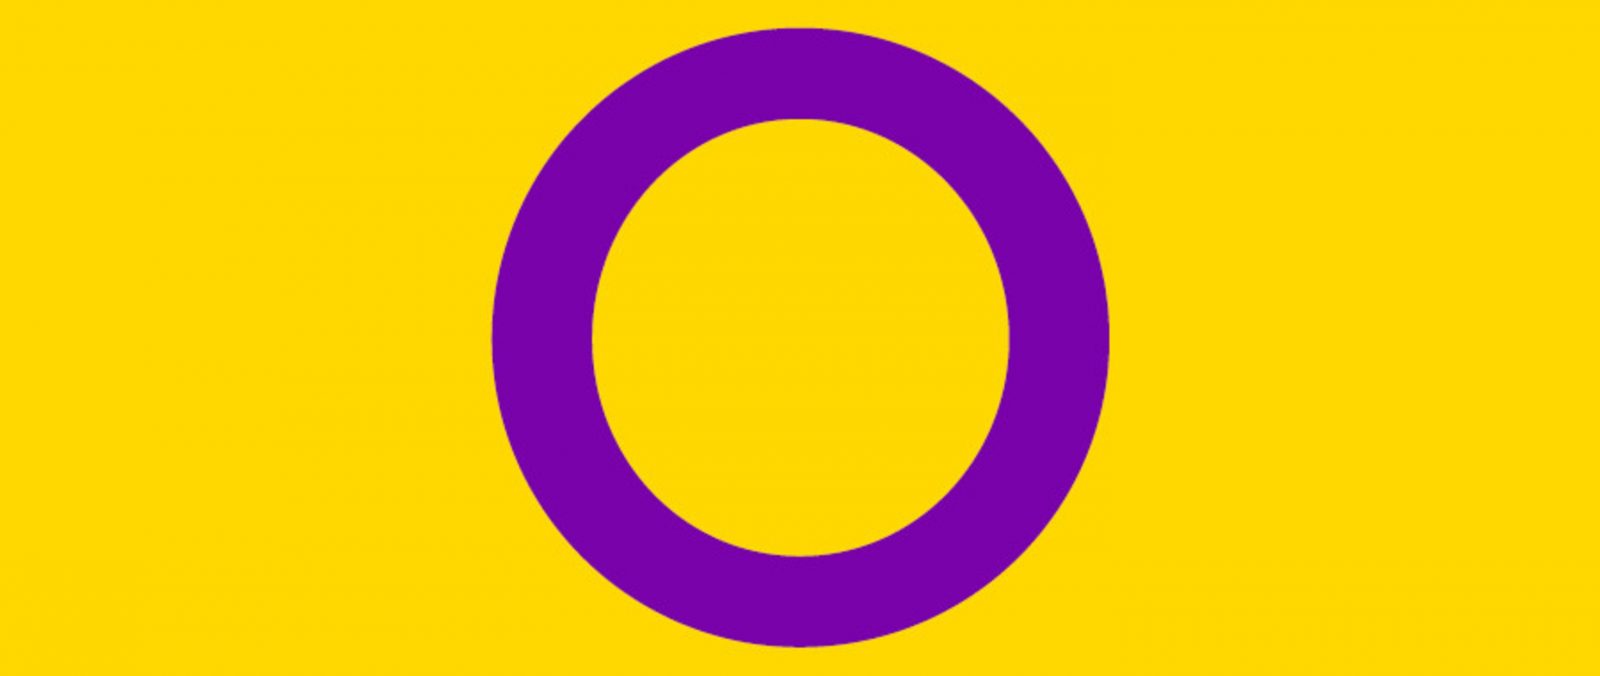 The Intersex flag.